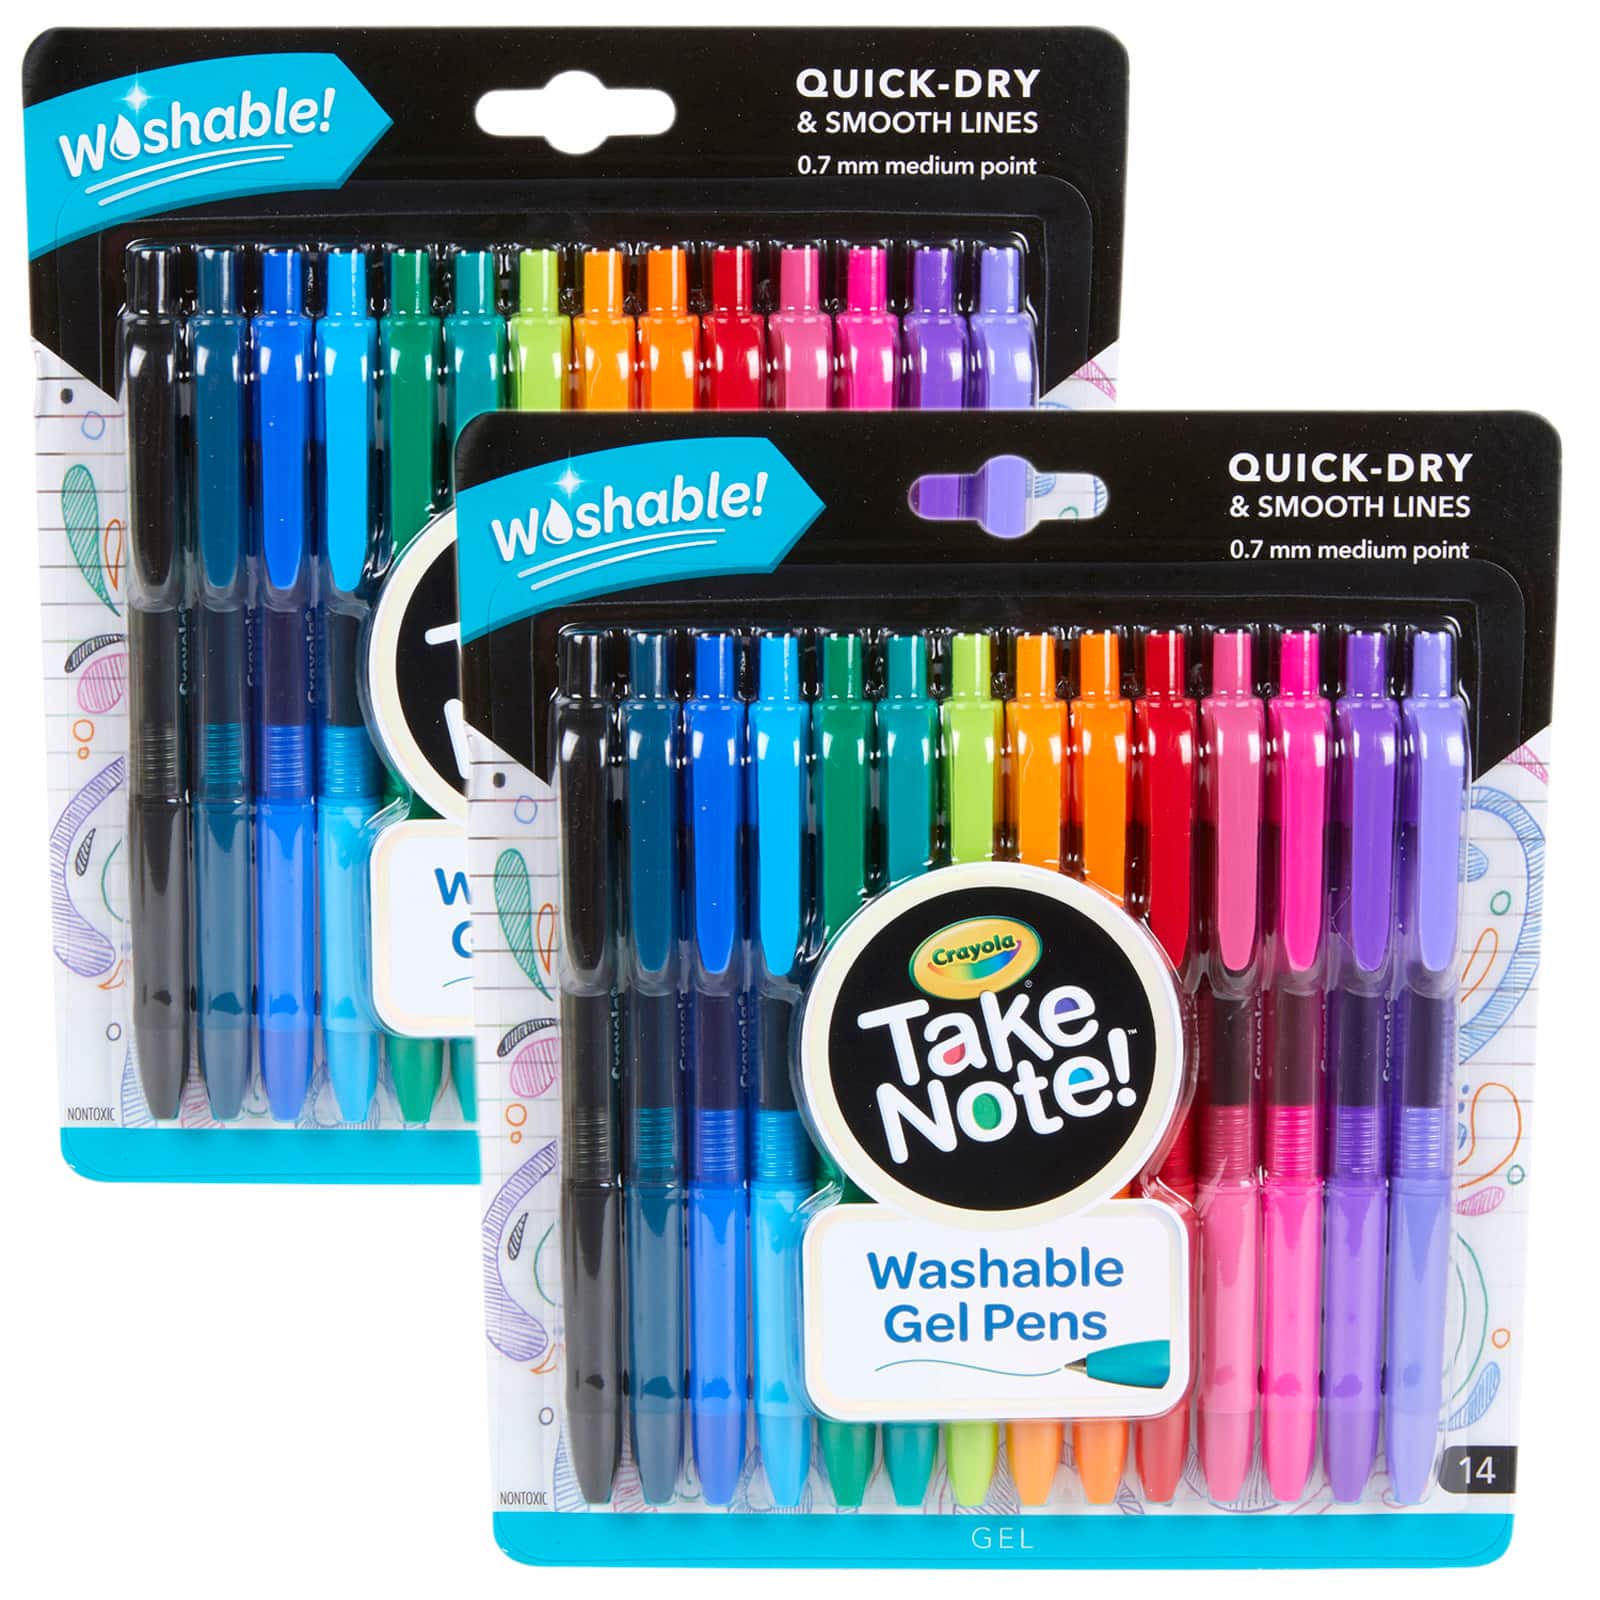 Crayola® Take Note!™ Washable Gel Pens, 2 Packs of 14